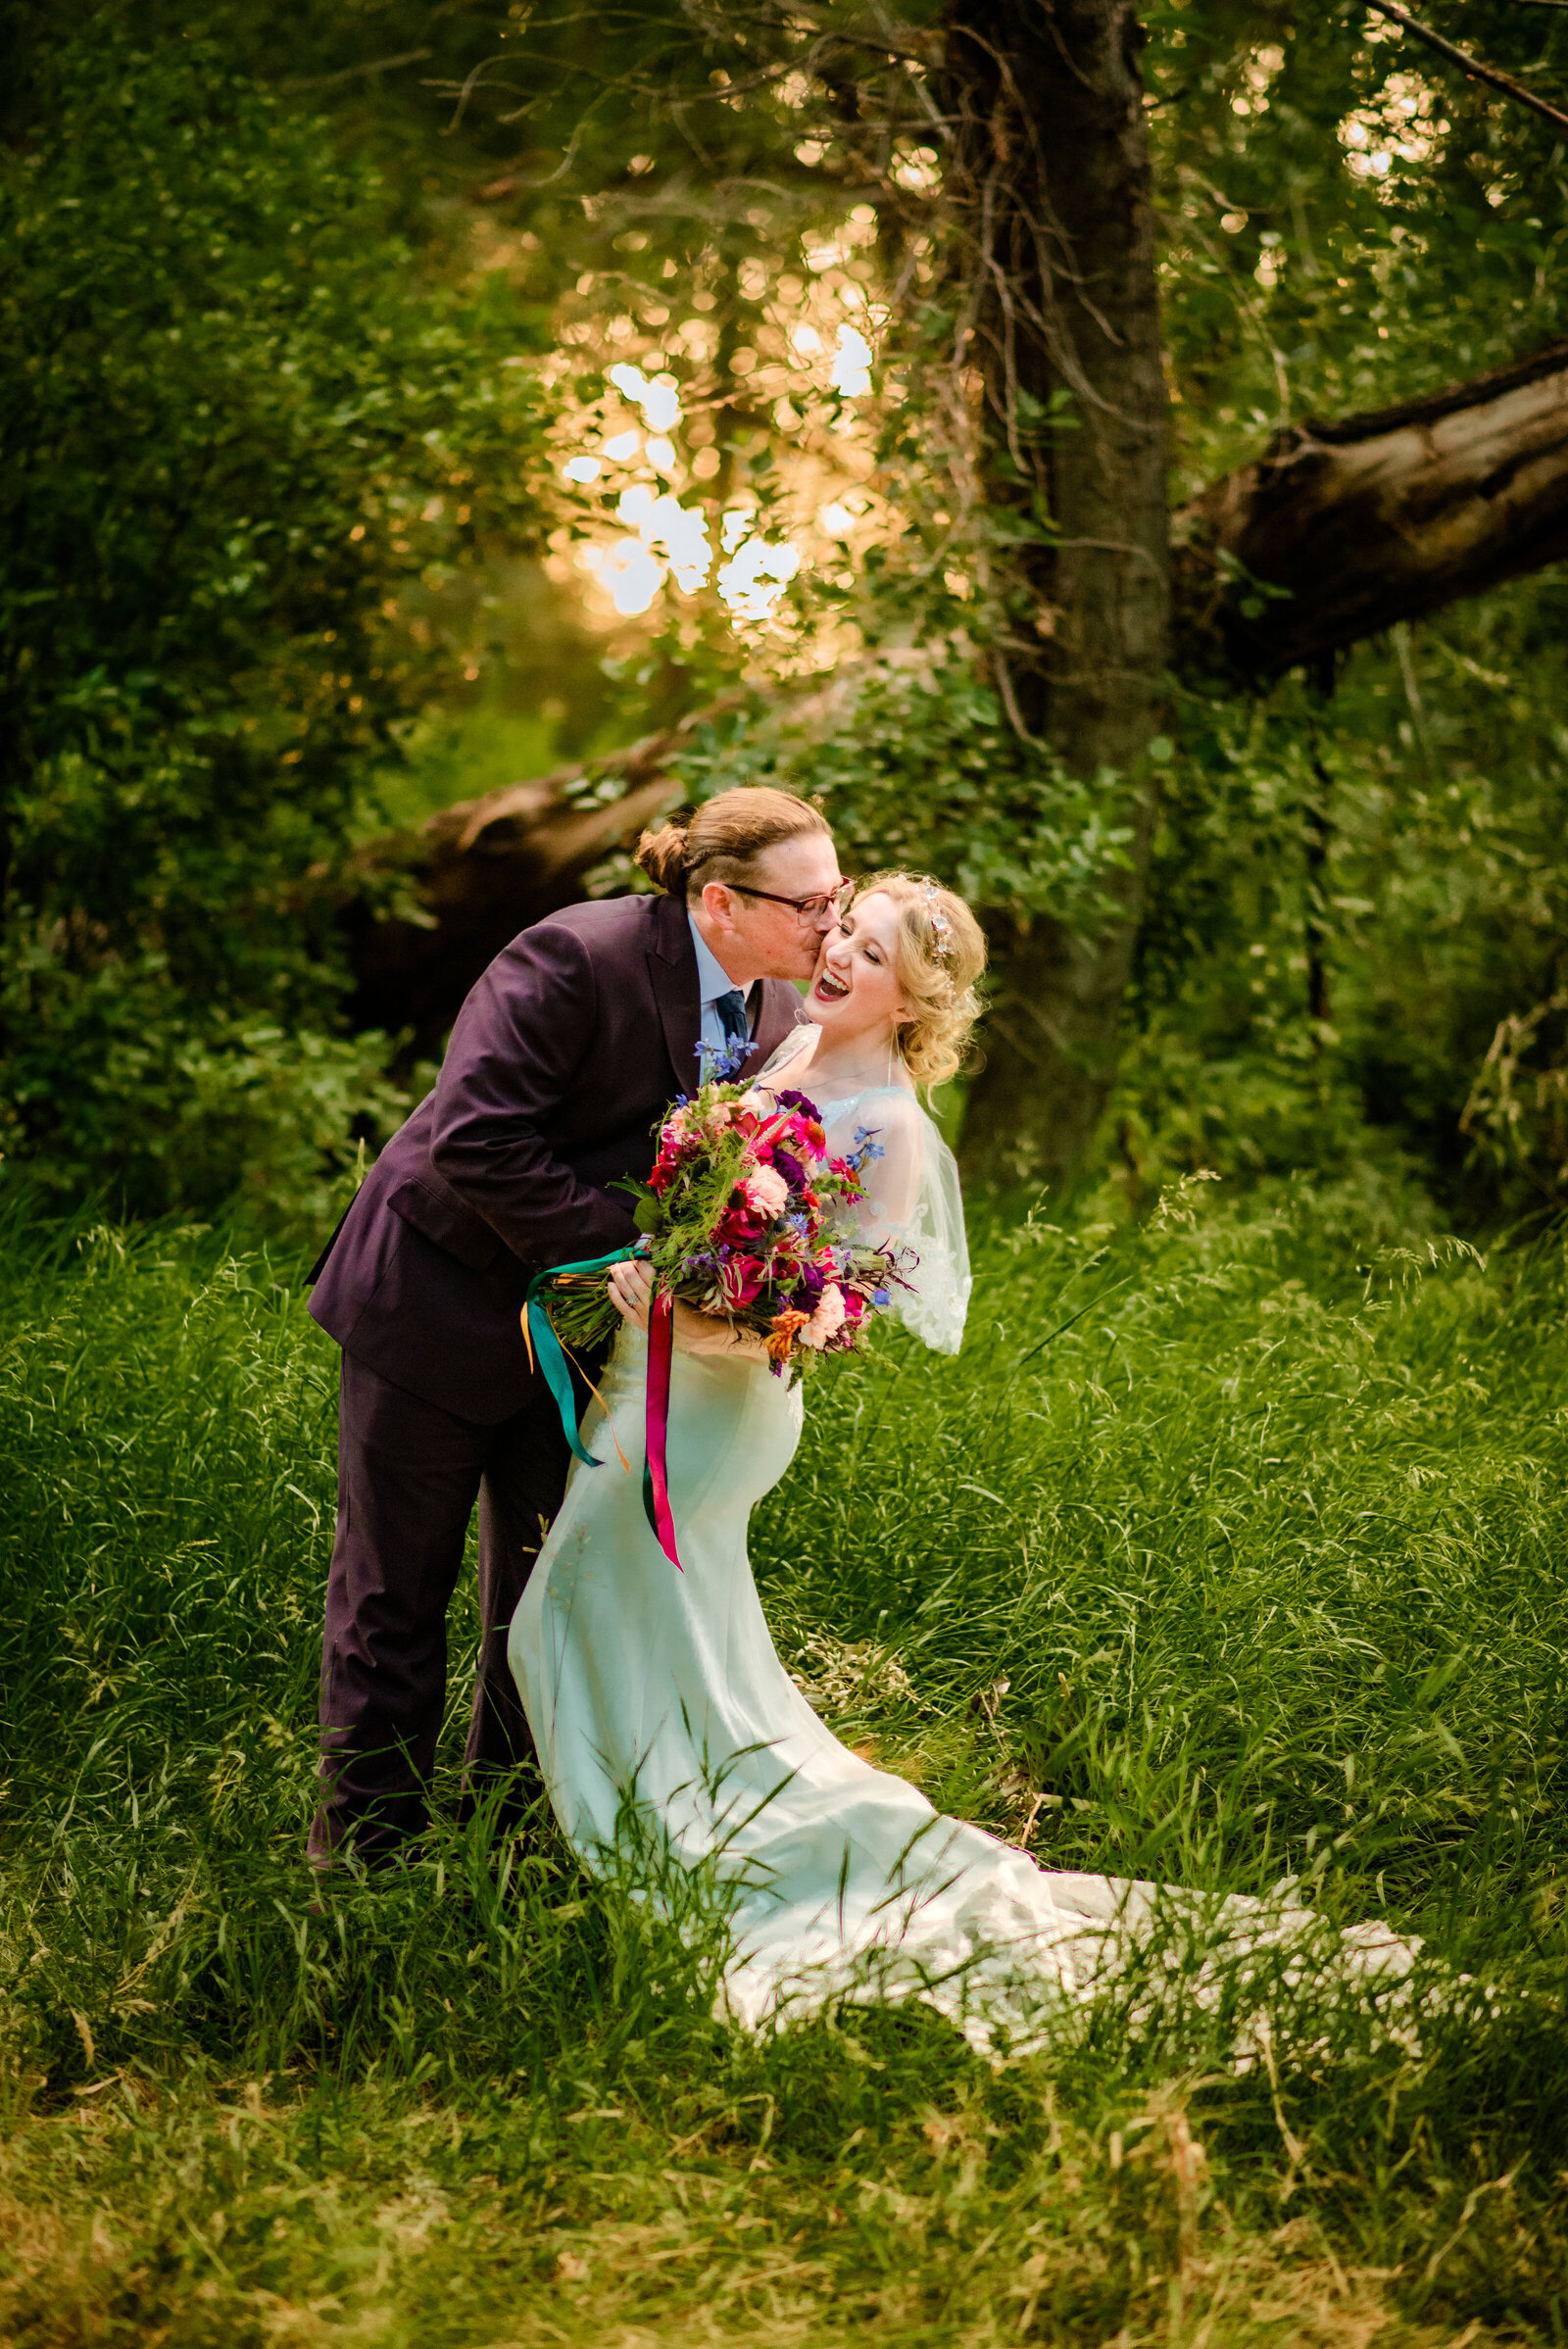 Jackson Hole wedding photographers capture outdoor bridal portraits while couple laughs together